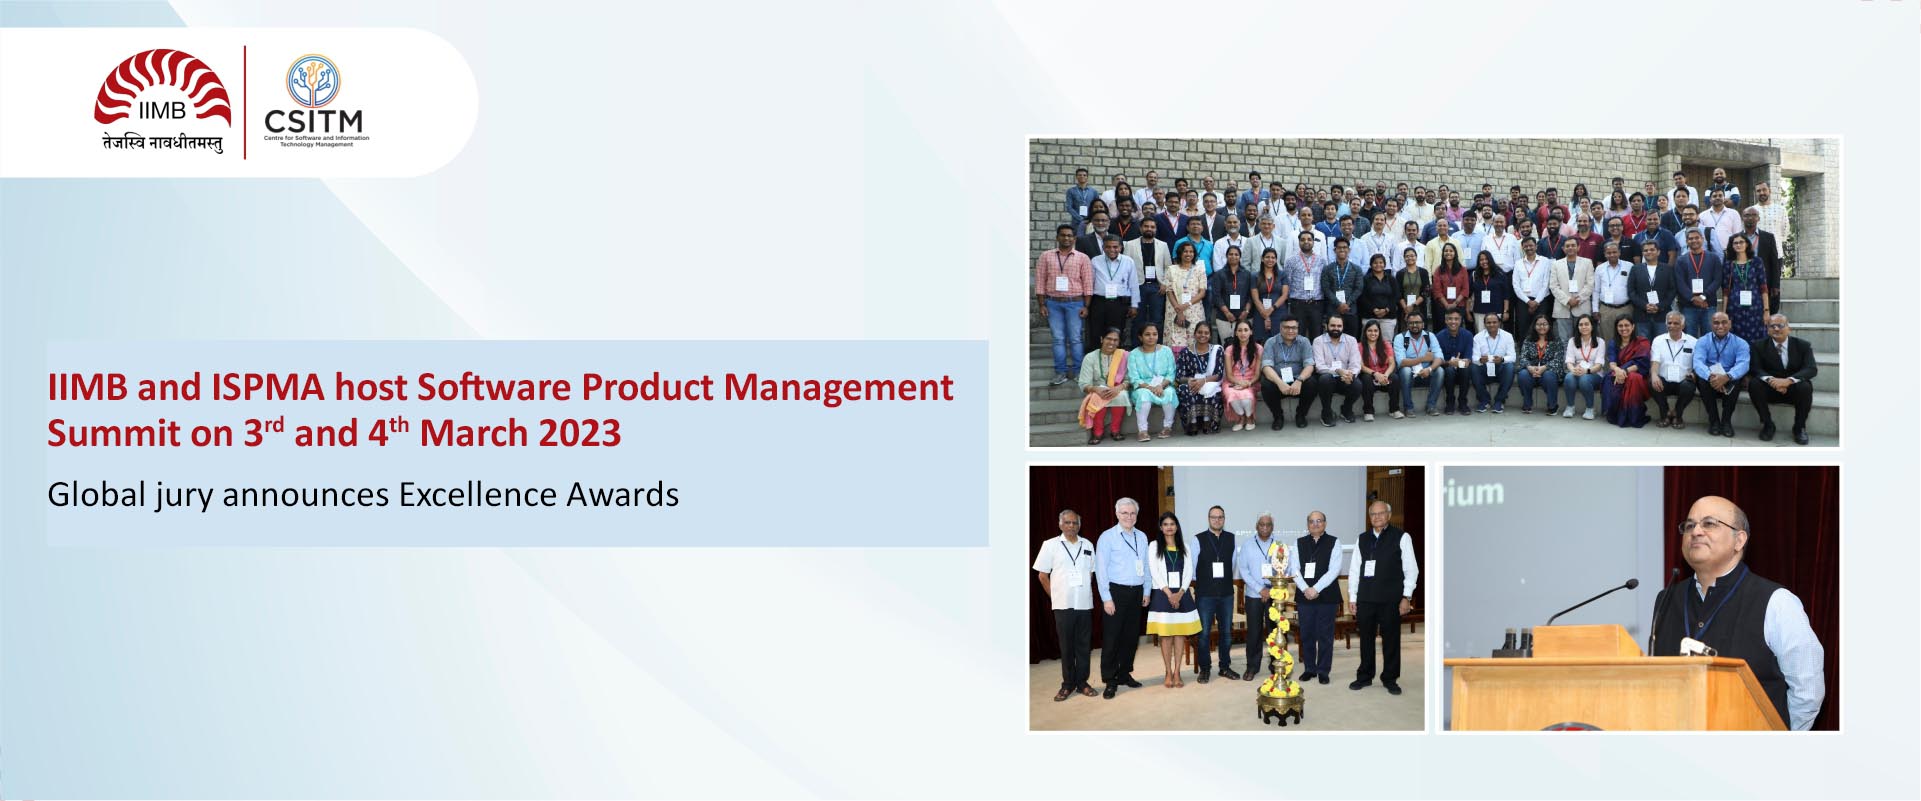 IIMB and ISPMA host Software Product Management Summit